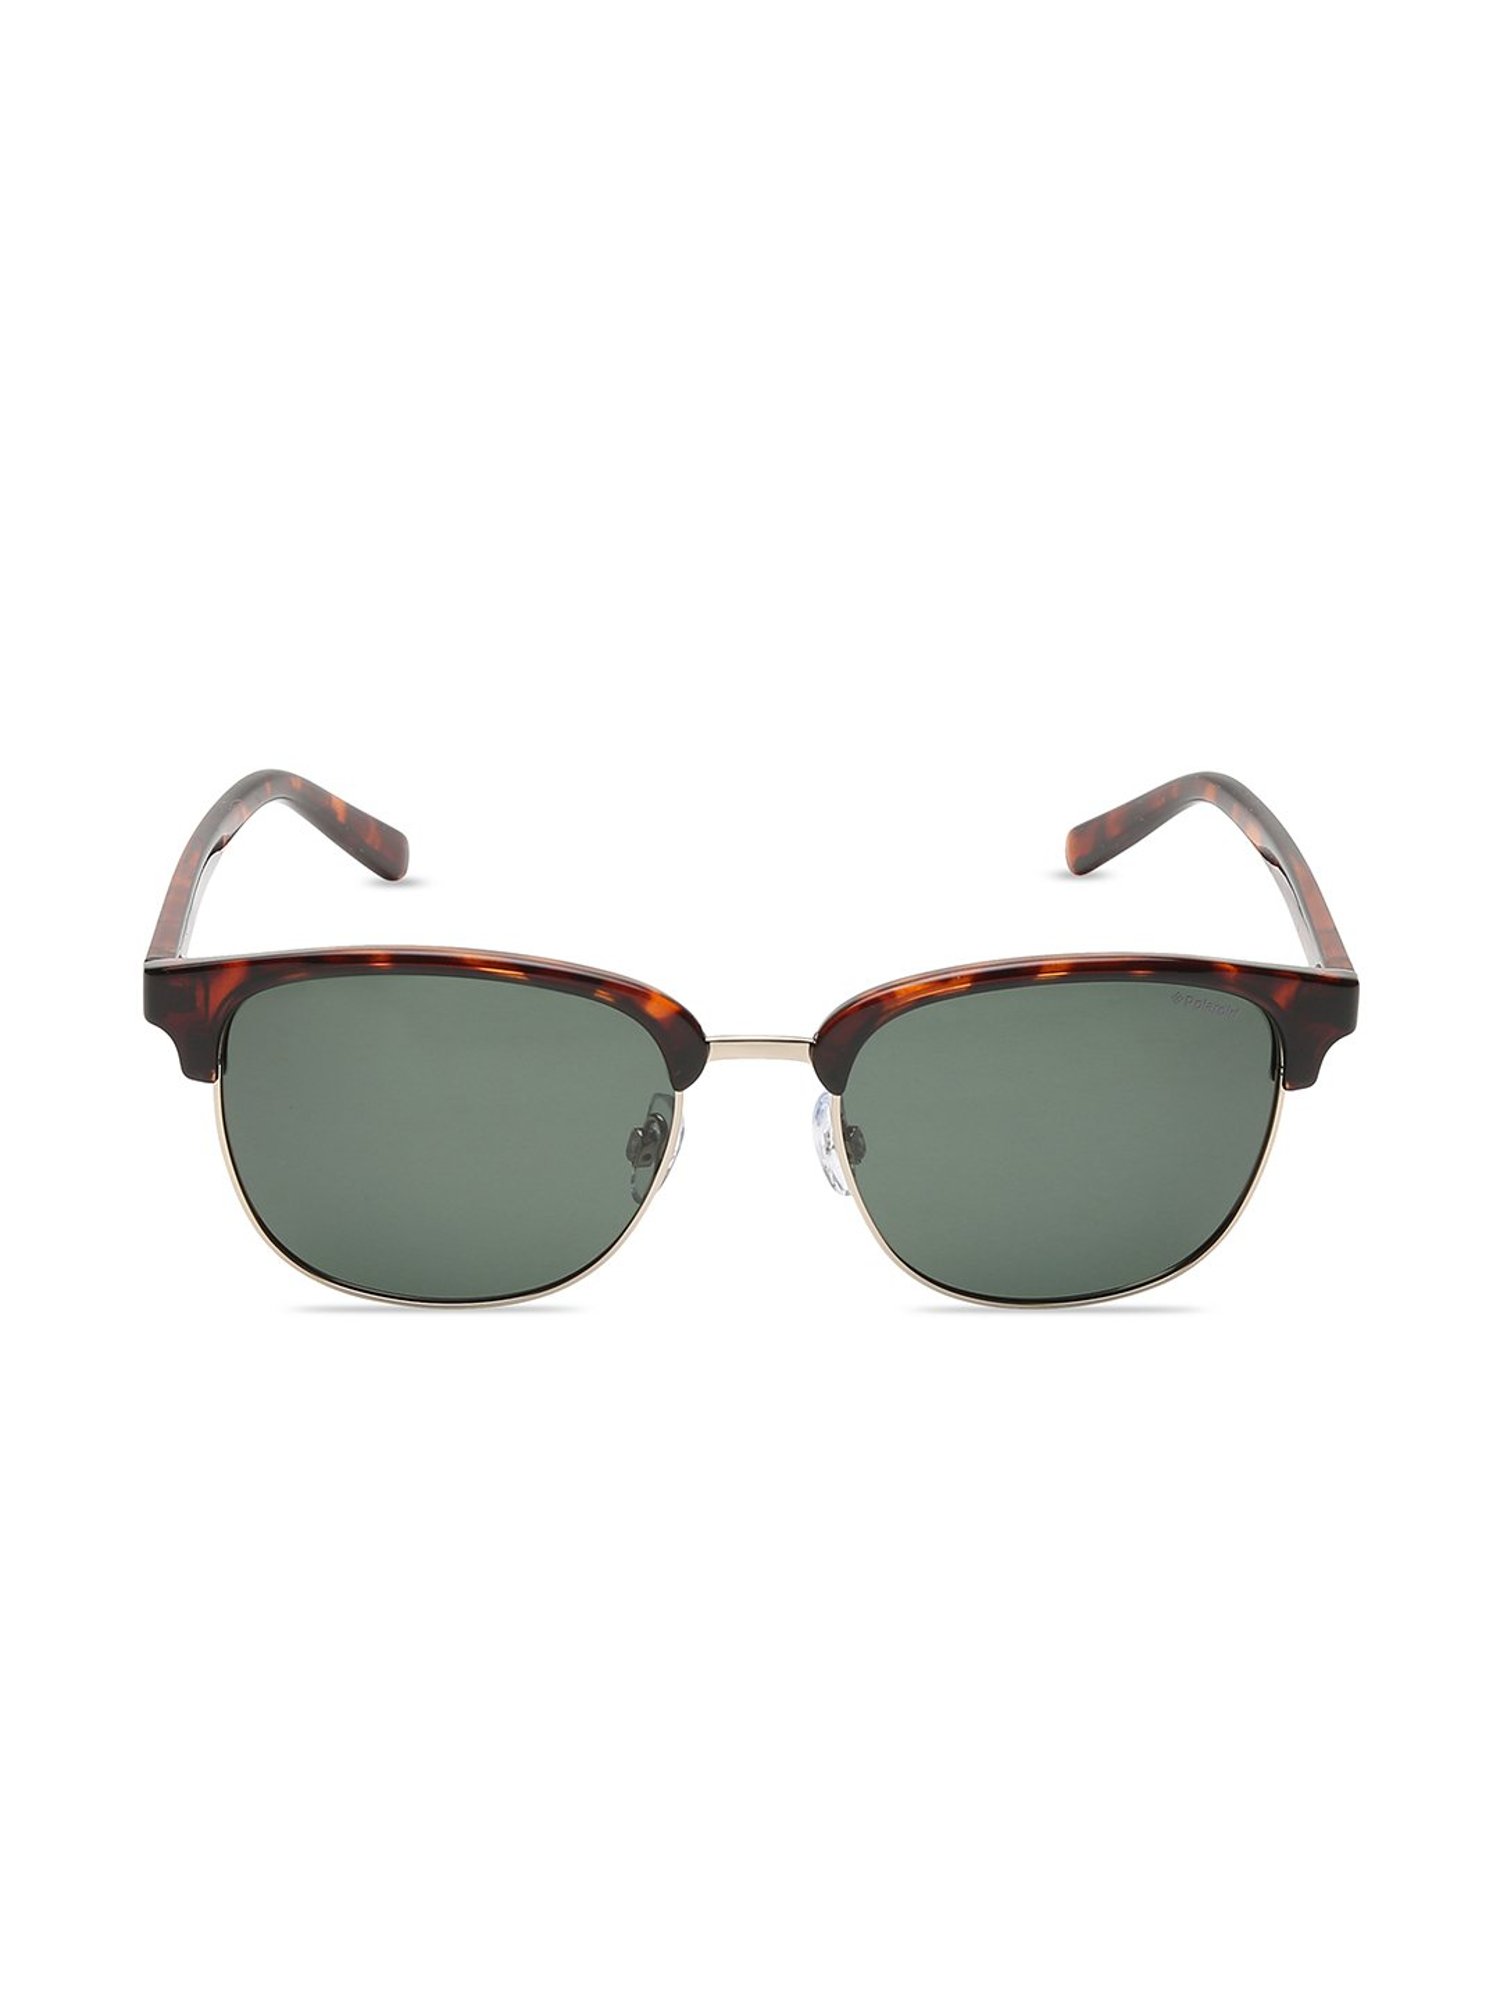 Ray-Ban Clubmaster Classic Polarized Green Classic G-15 Unisex Sunglasses  RB3016 990/58 51 805289346906 - Sunglasses, Clubmaster - Jomashop